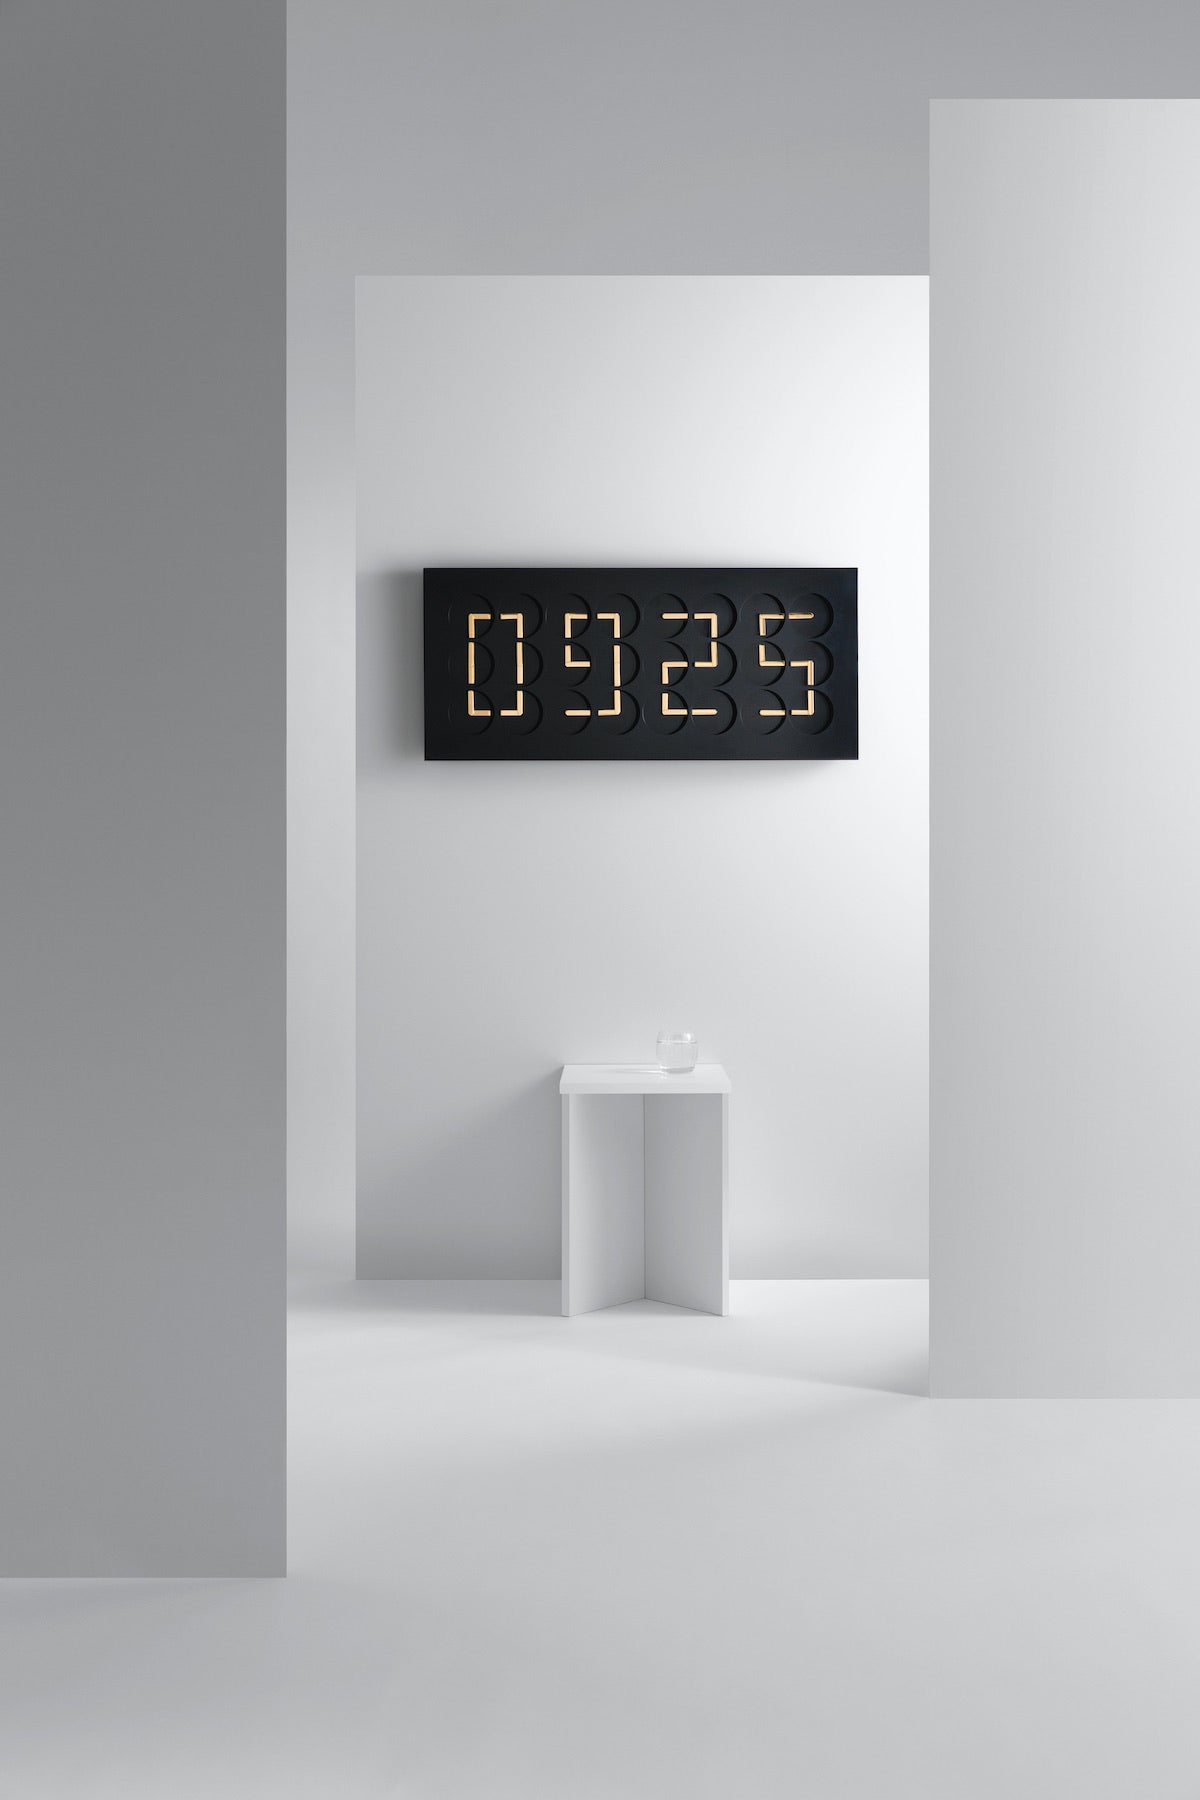 ClockClock 24 – Black